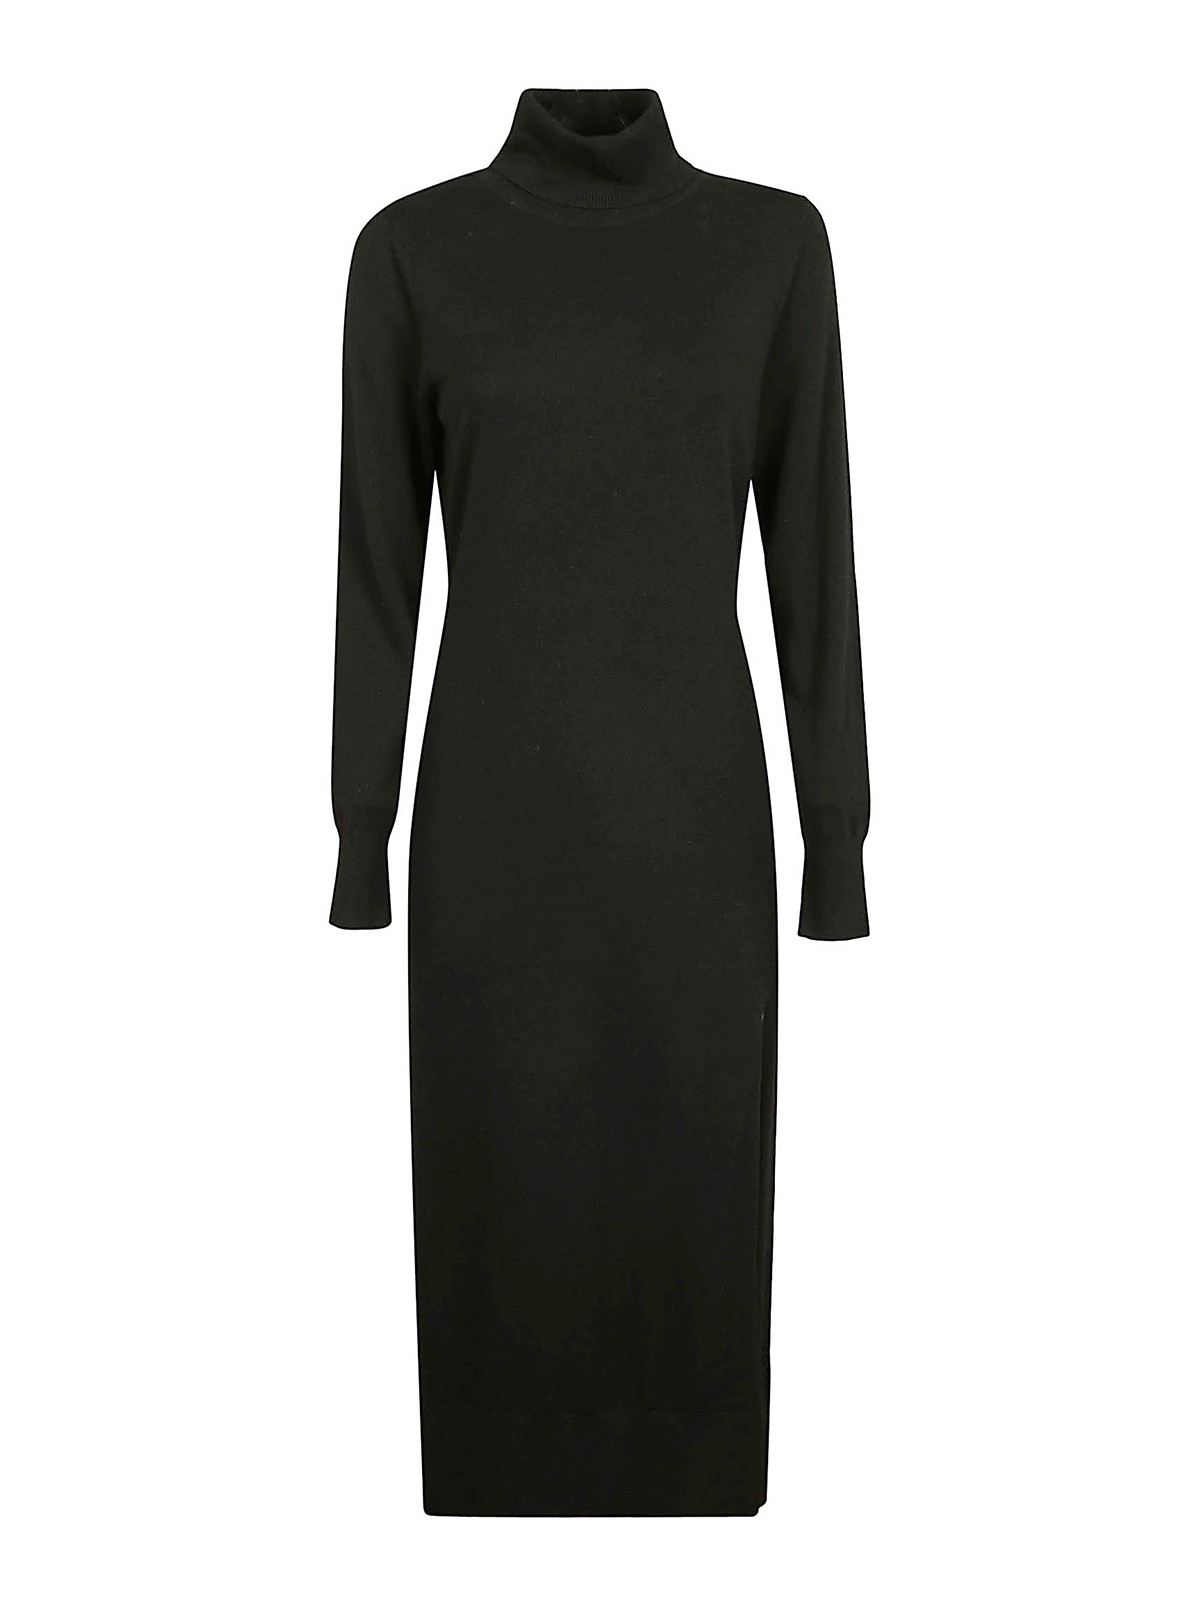 Michael Kors Wool Blend Dress In Black